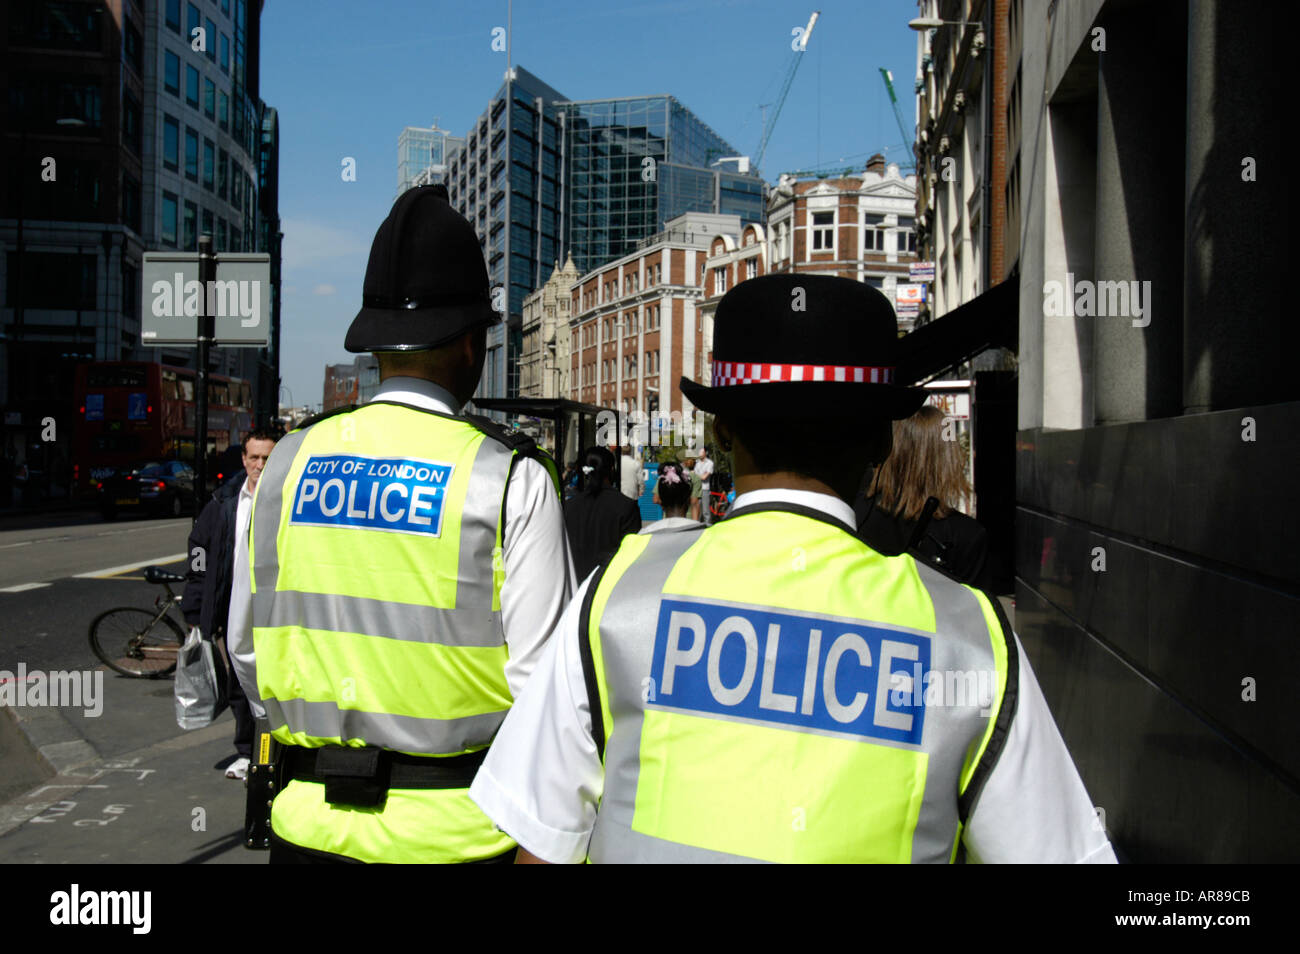 City of London Police, England UK Stock Photo